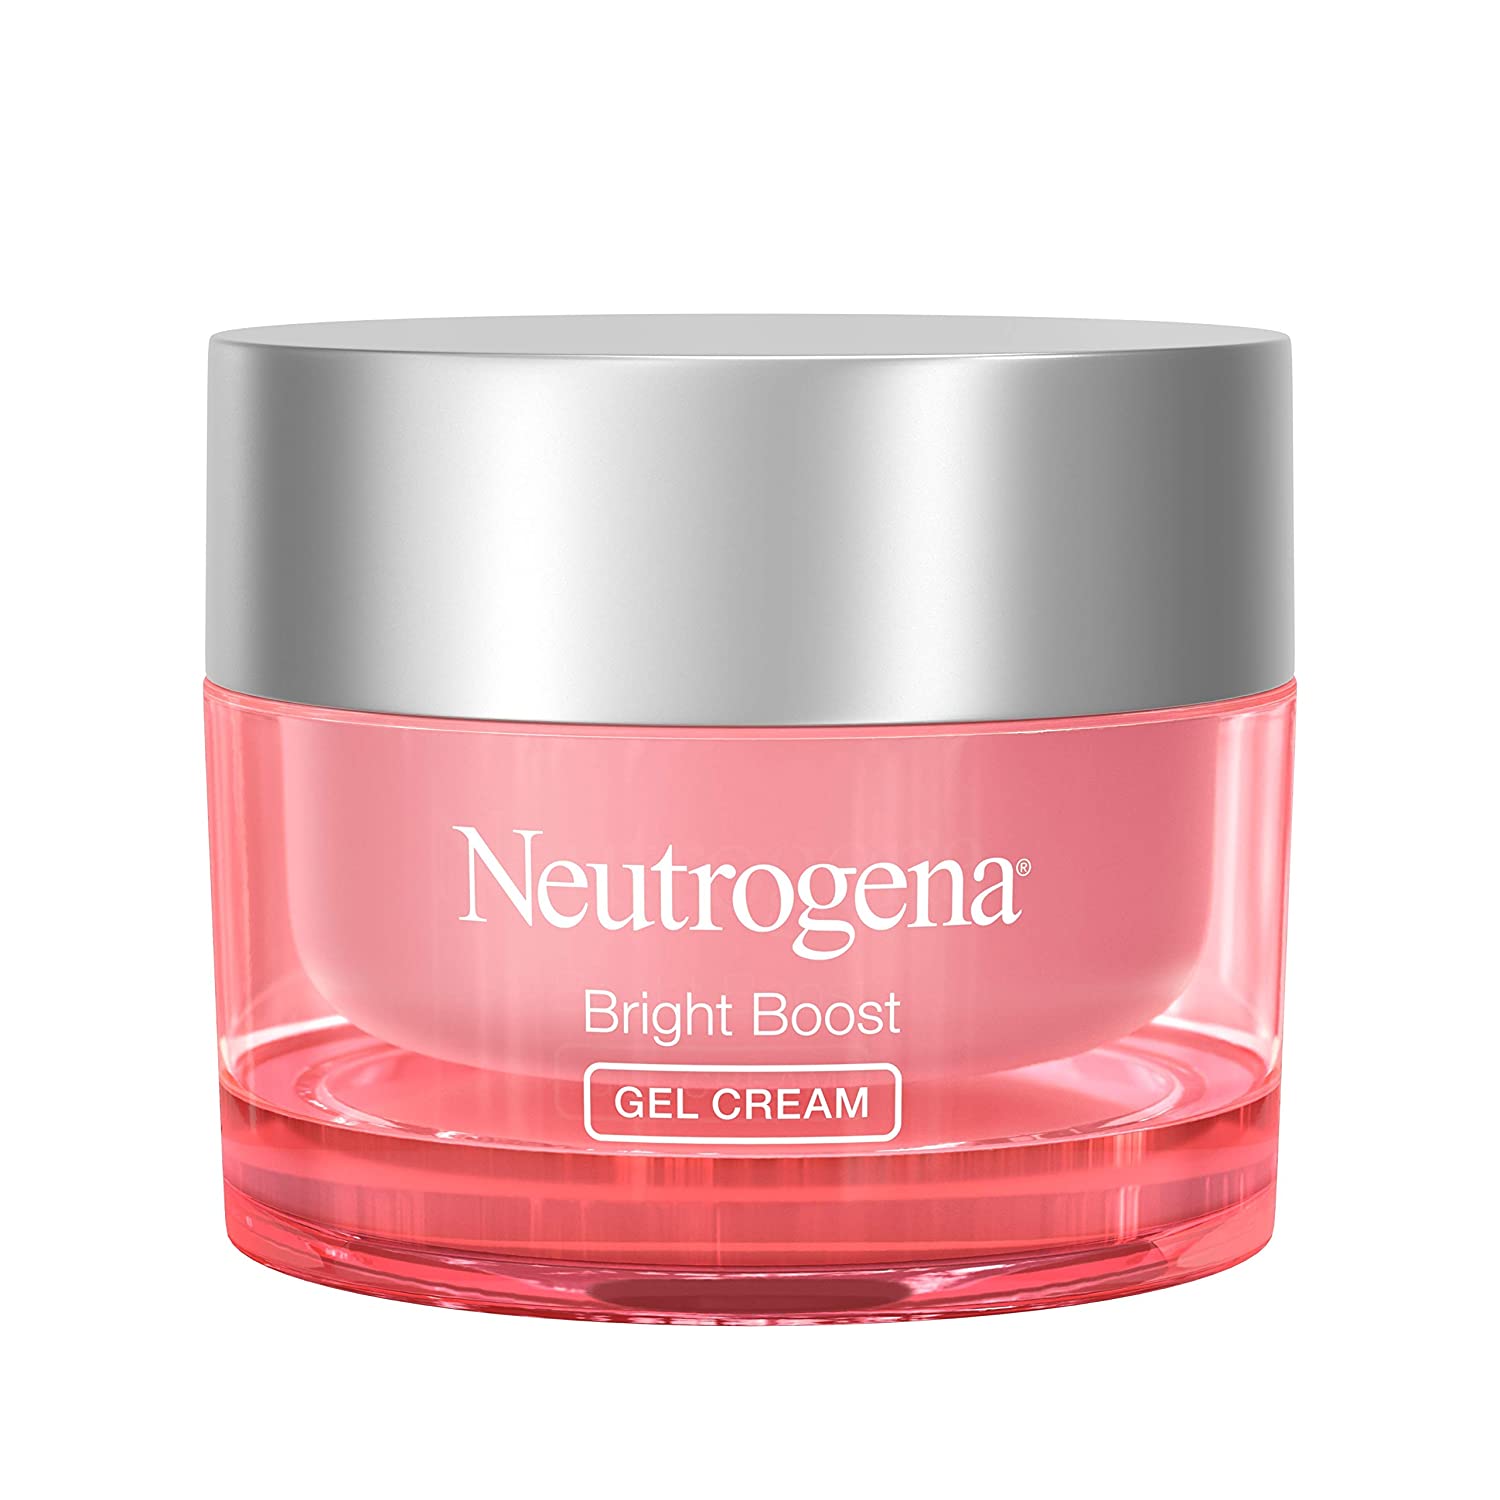 Neutrogena Bright Boost Brightening Moisturizing Face with Skin Resurfacing and Brightening Neoglucosamine, Gel Cream, 1.7 Fl Oz